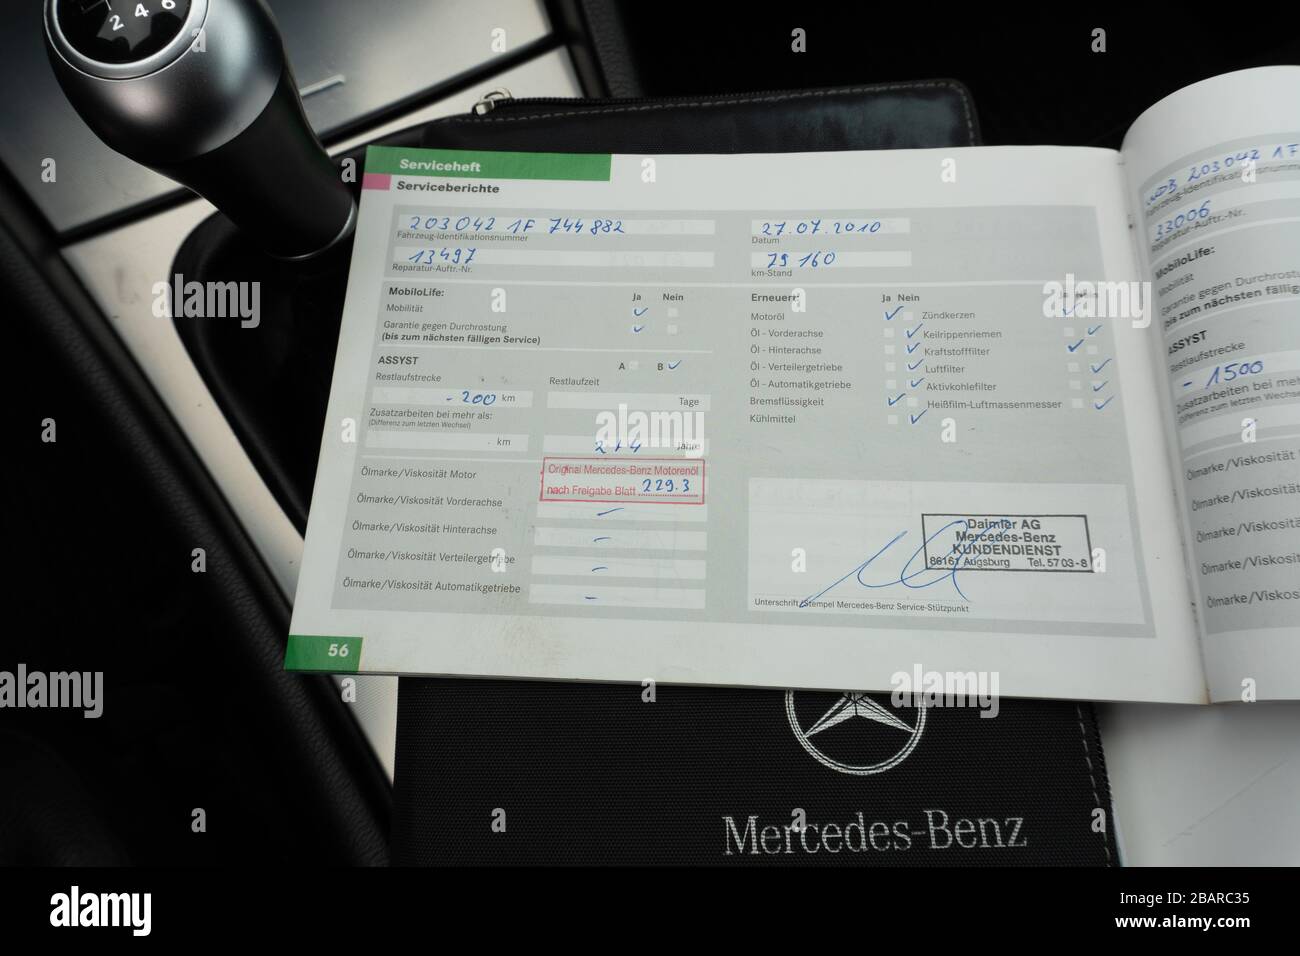 Mercedes Benz service history book-scheduled maintenance, check